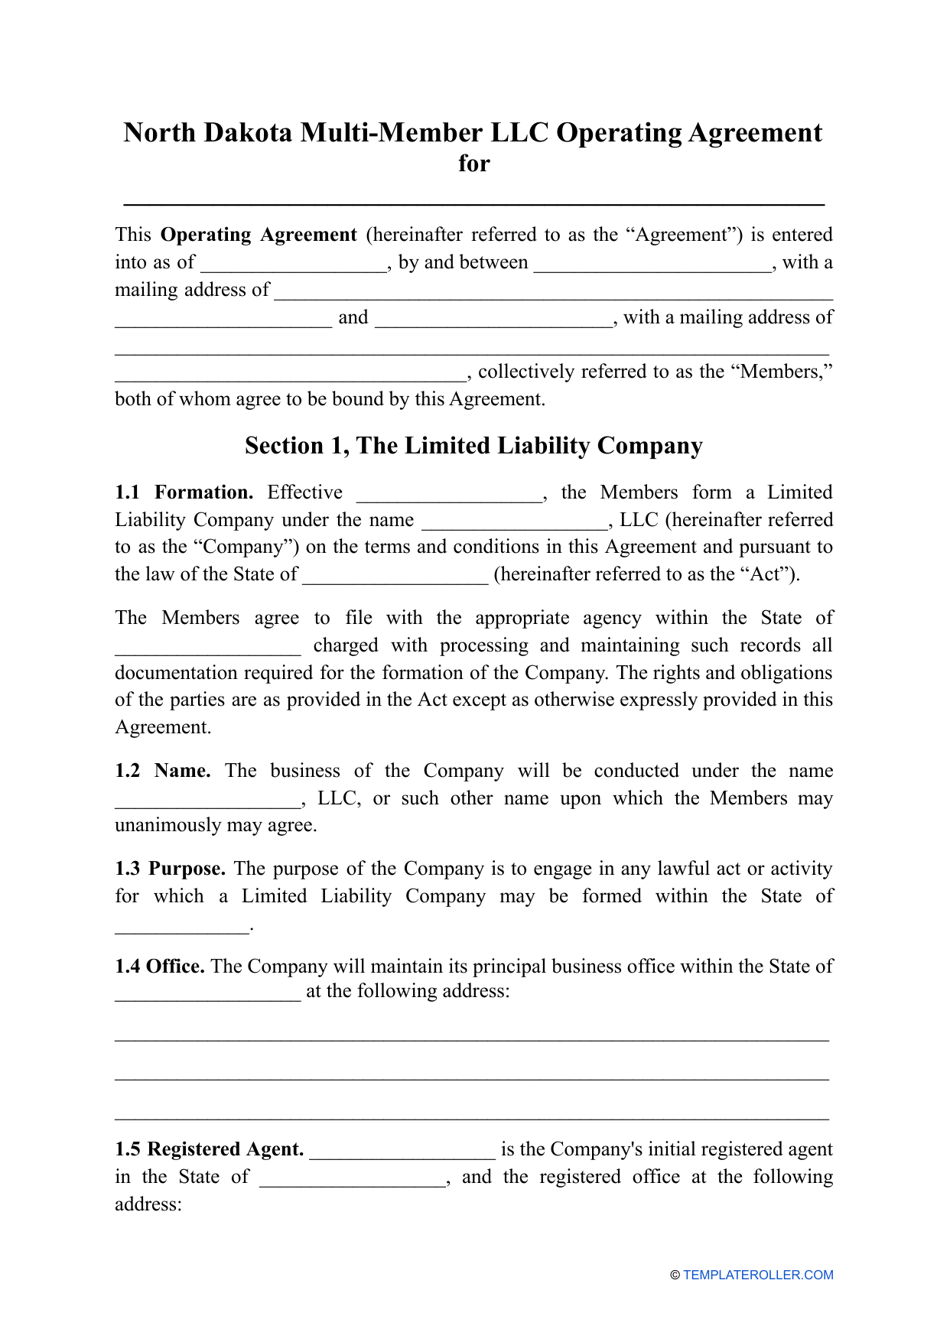 Multi-Member LLC Operating Agreement Template - North Dakota, Page 1